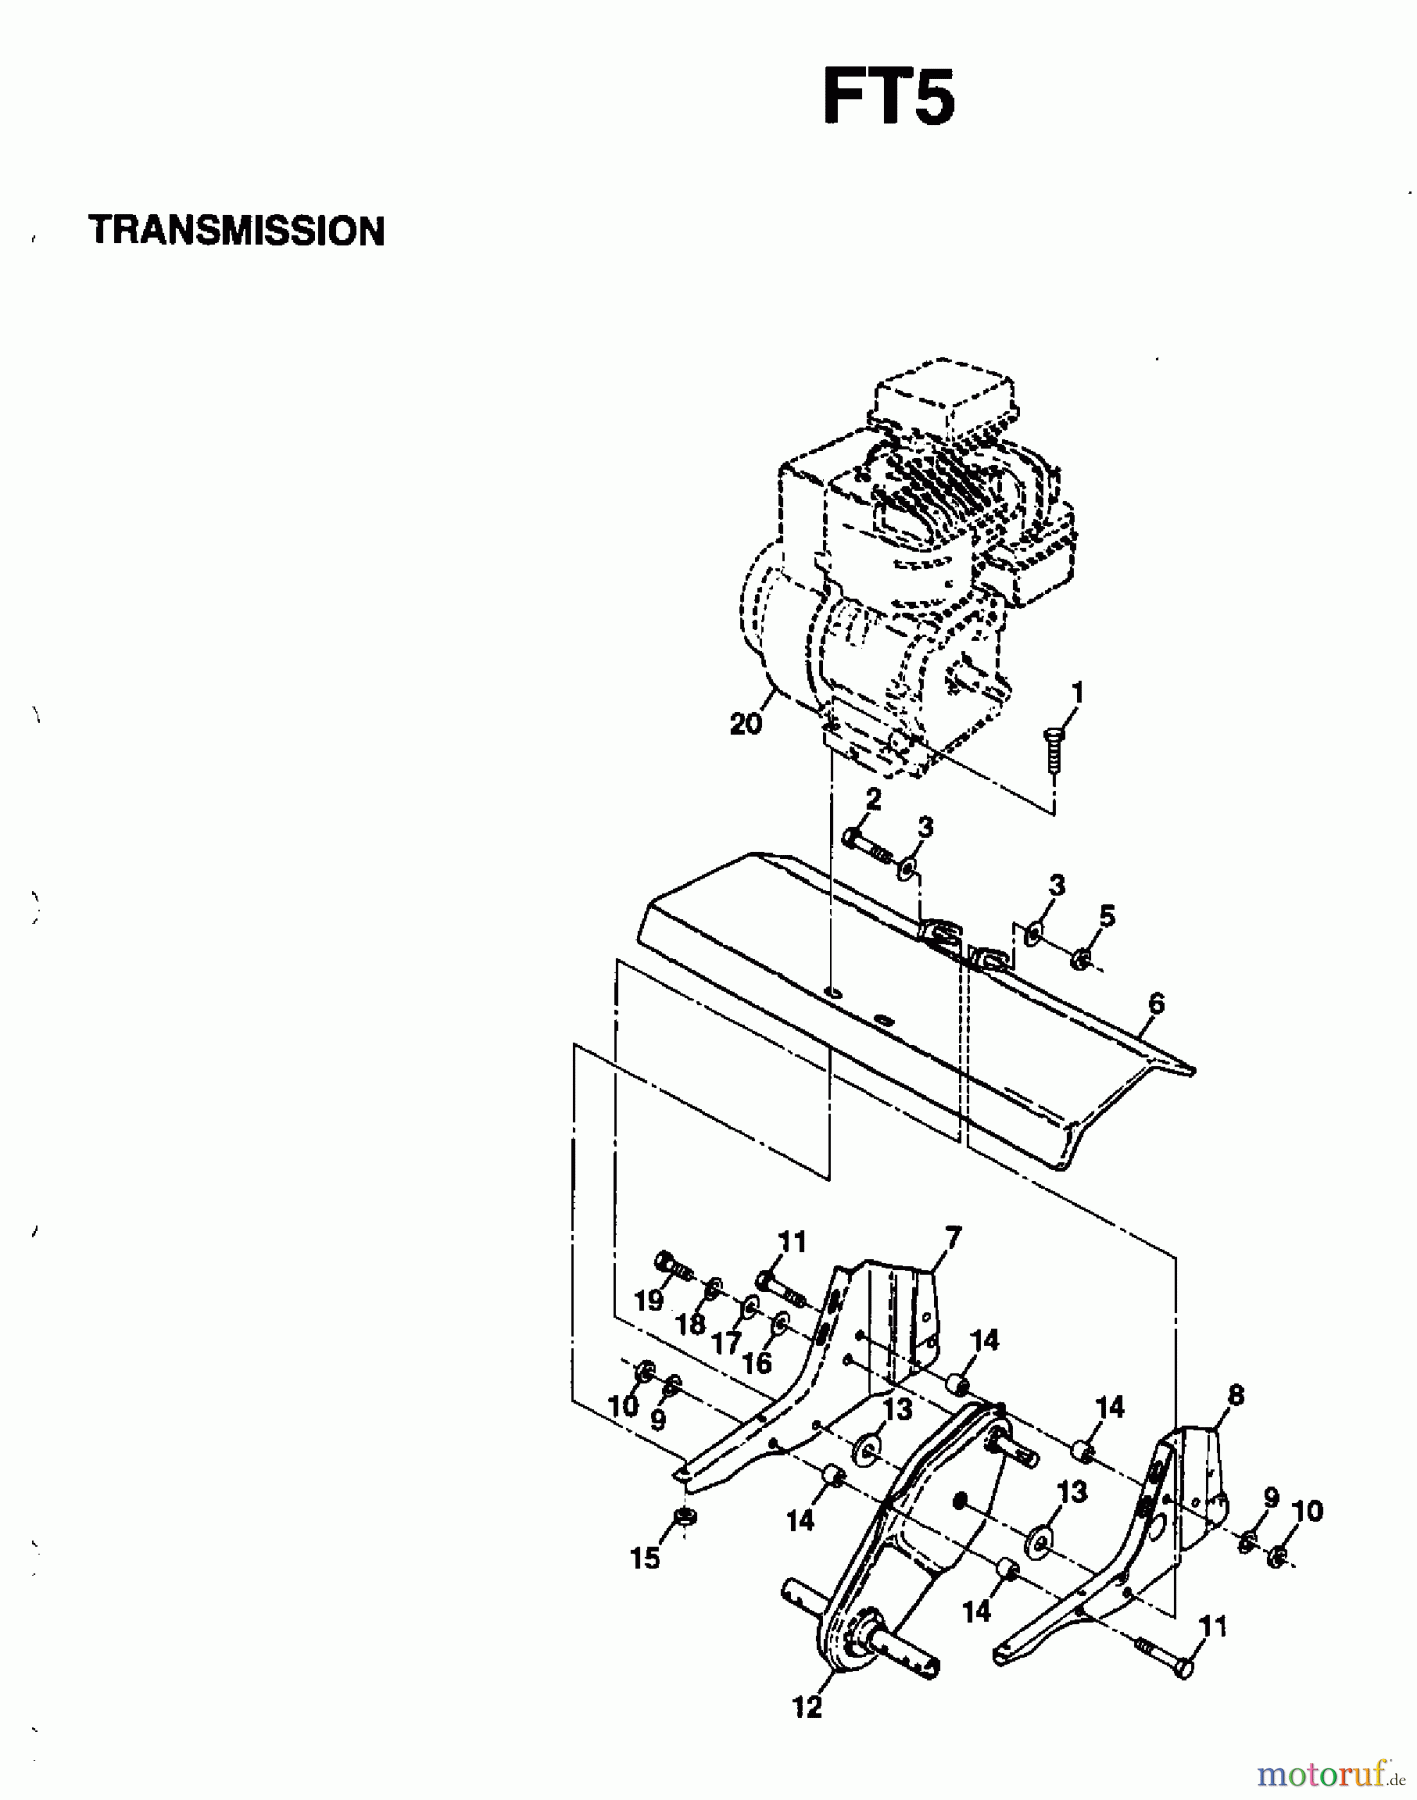  Jonsered Motorhacken / Kultivierer FT5 (954003311) - Jonsered Front-Tine Tiller (1997-01) TRANSMISSION #2